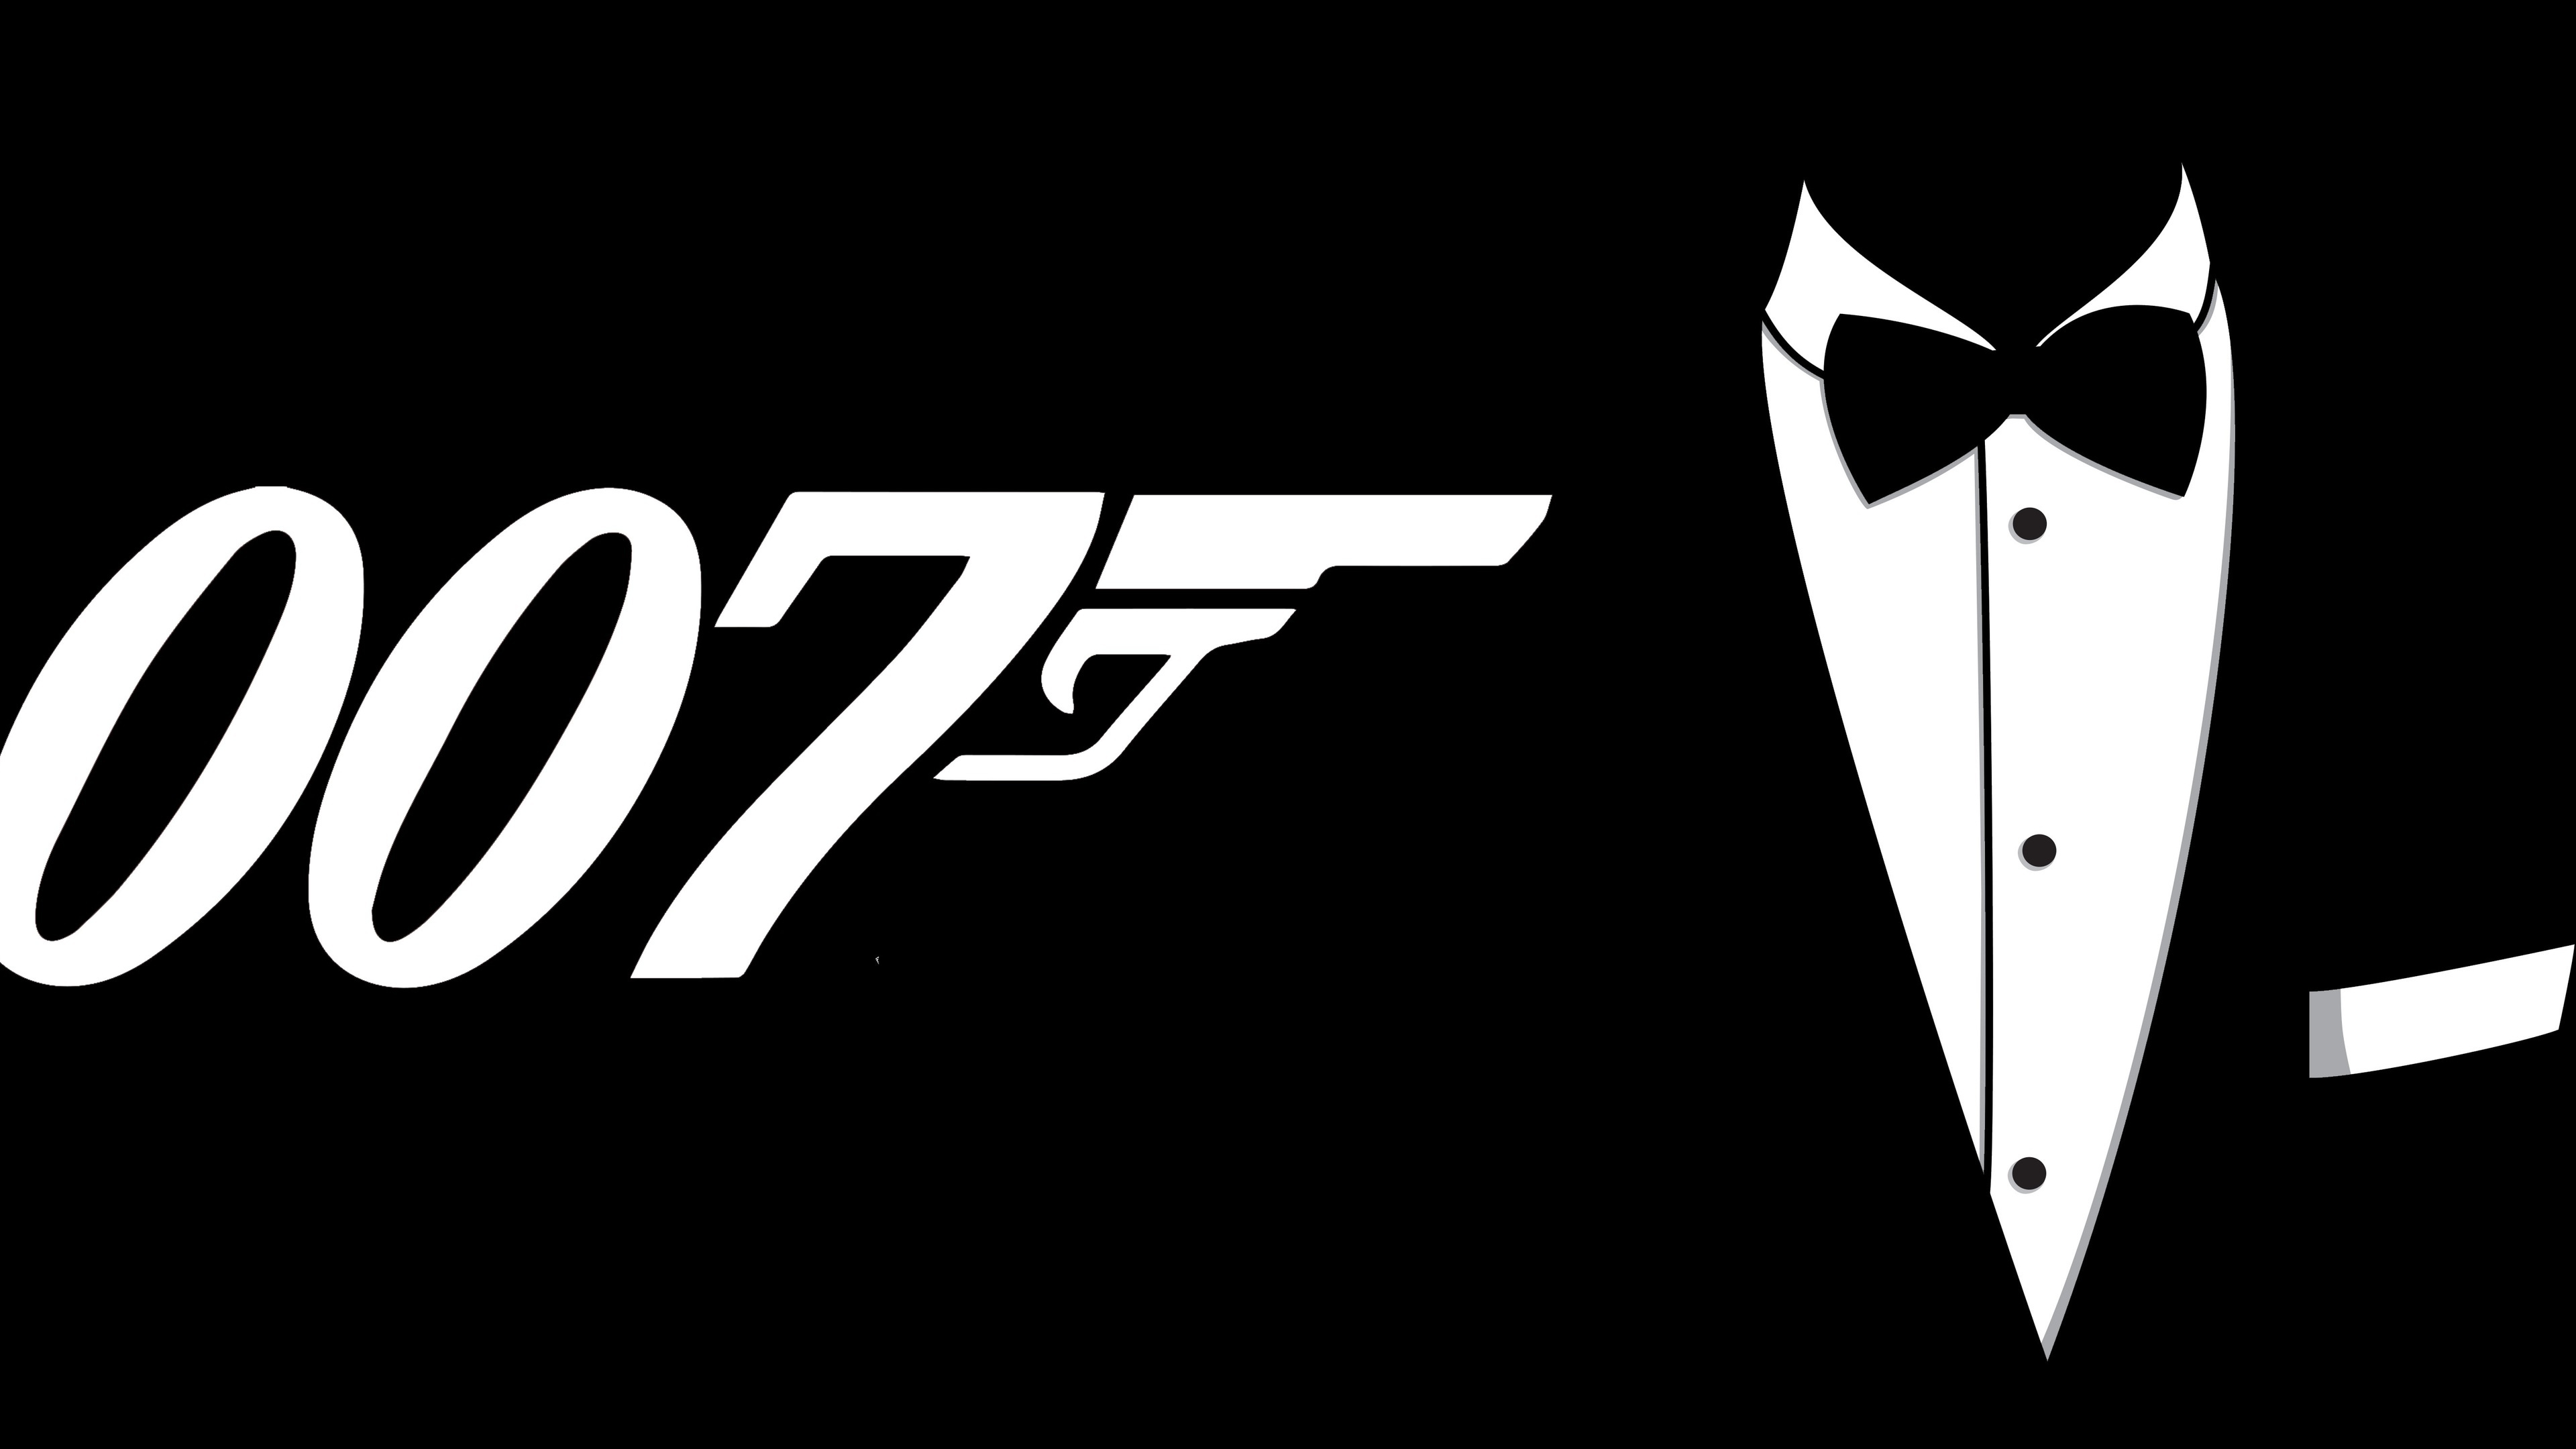 General 3840x2160 James Bond smoking logo simple background black background artwork minimalism 007 movie characters